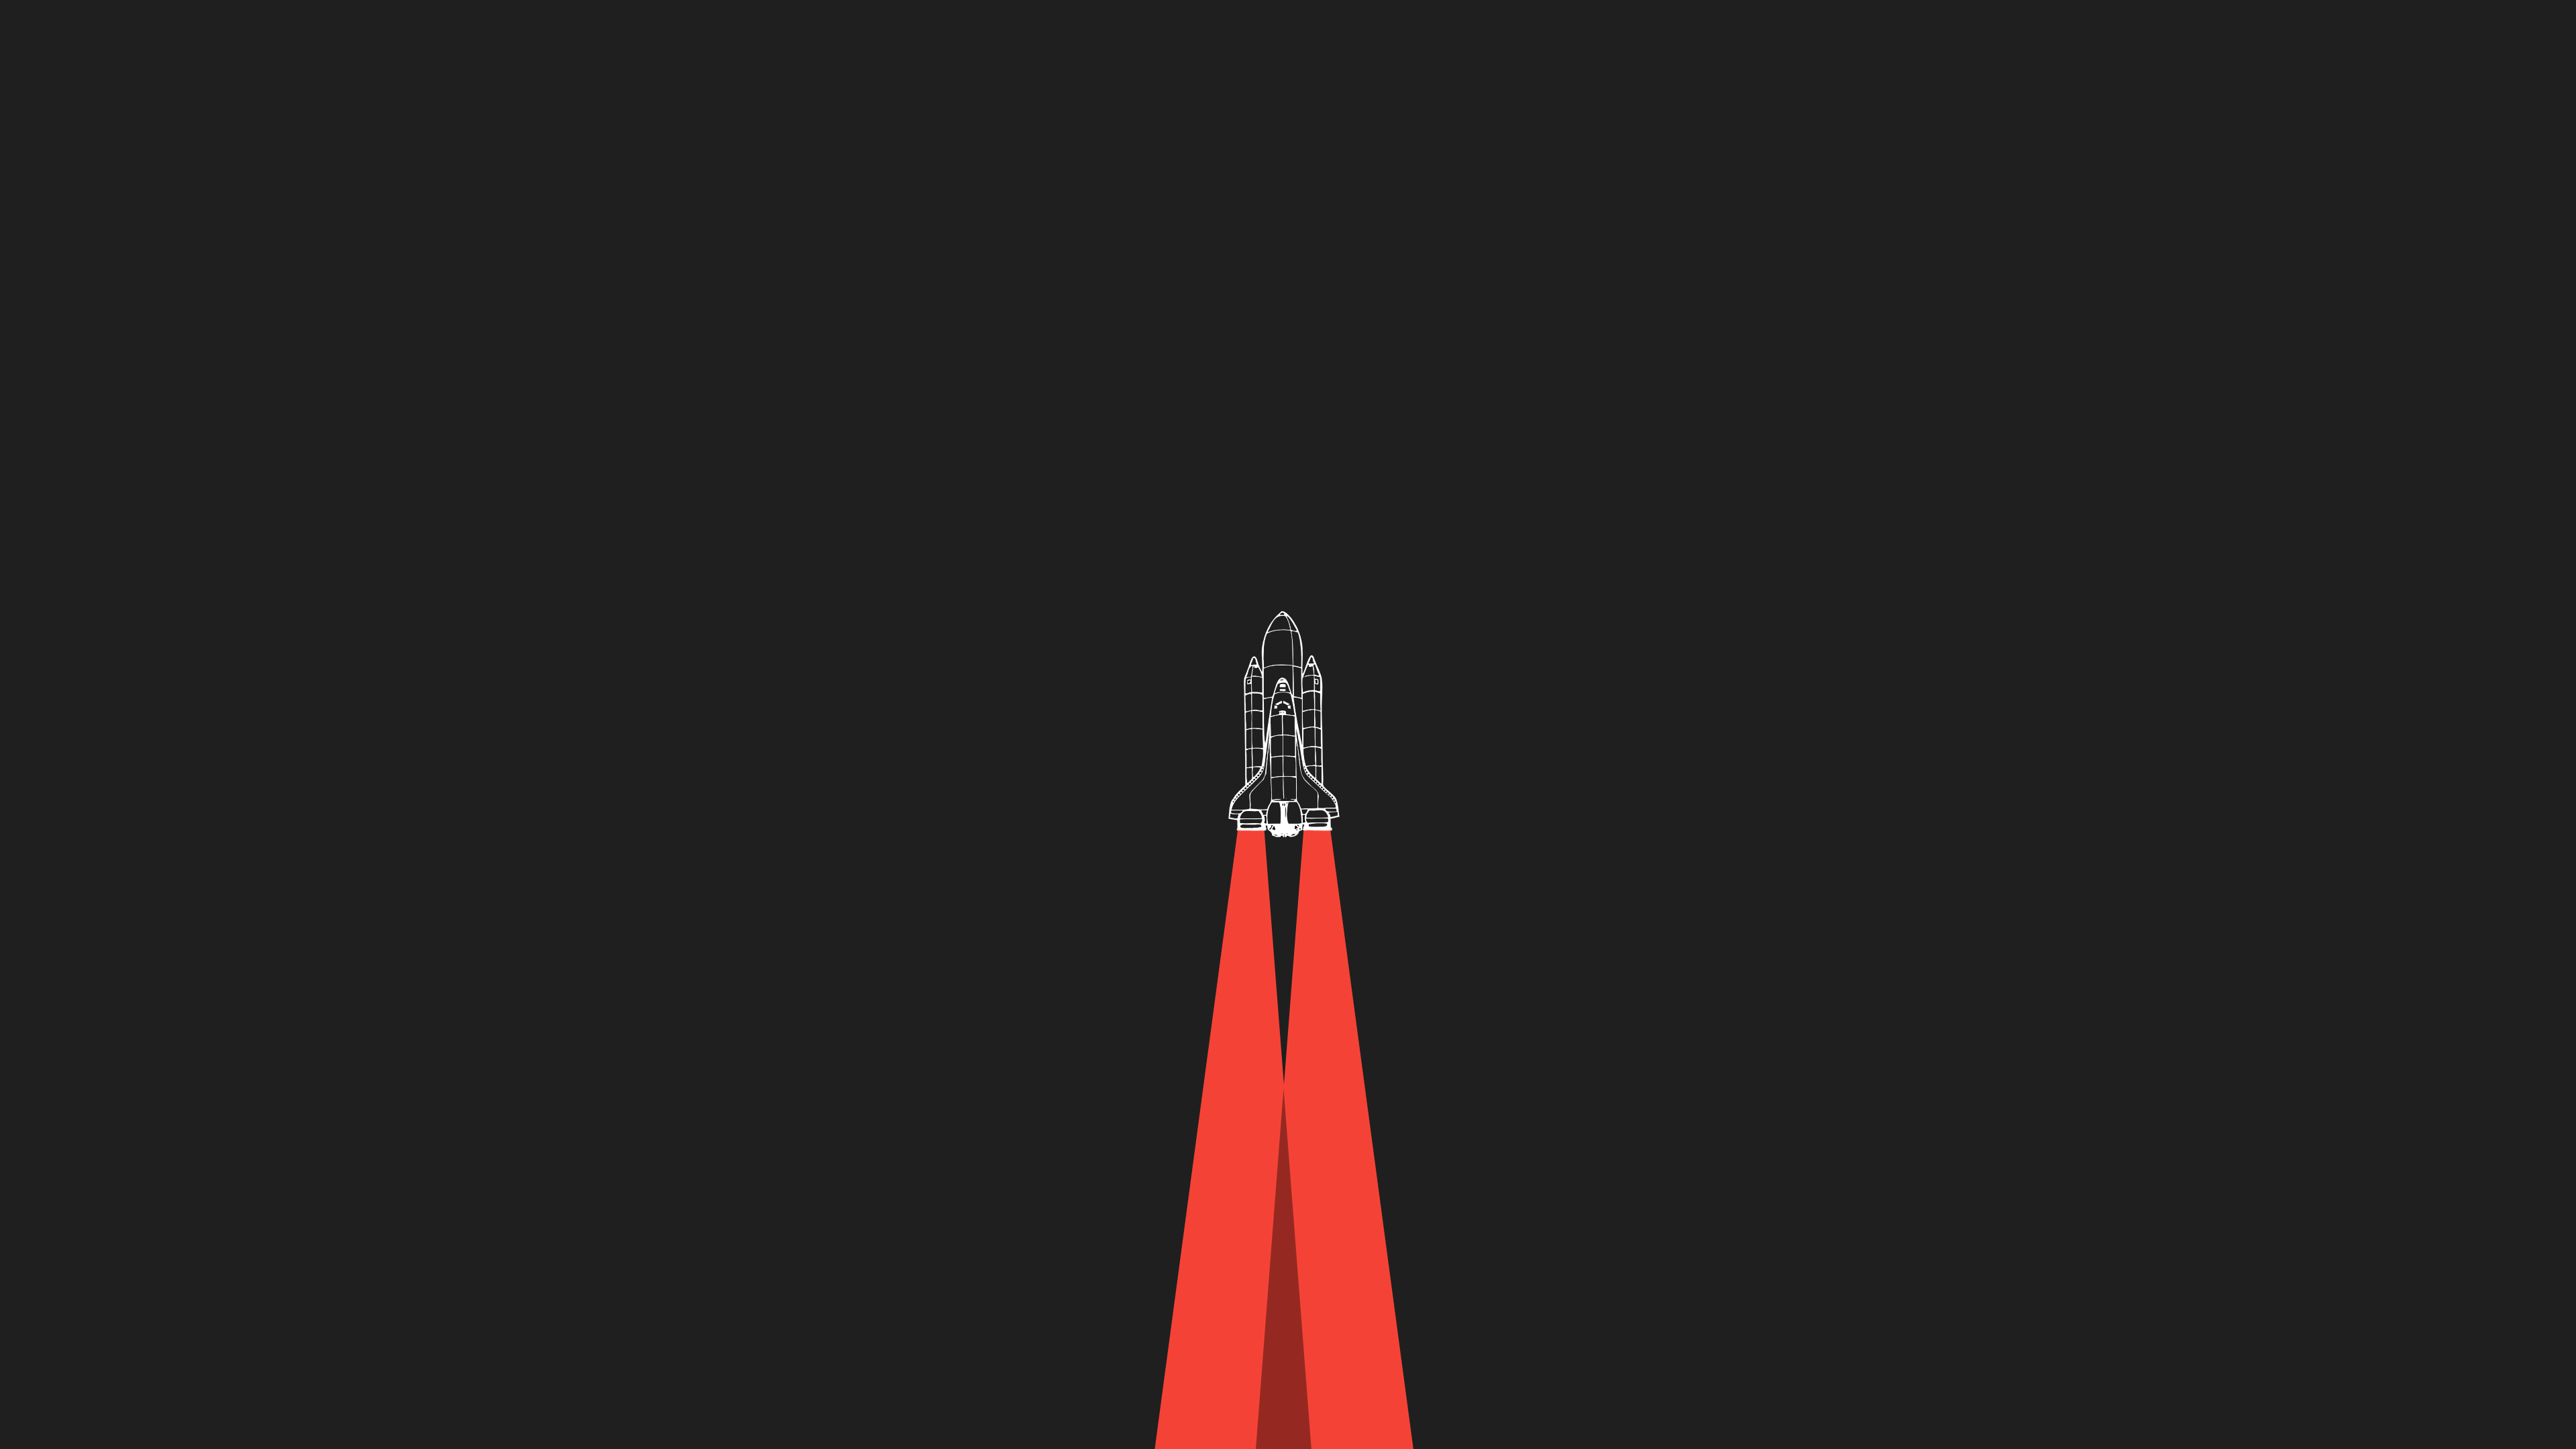 Minimalistic Rocket Wallpaper that I created